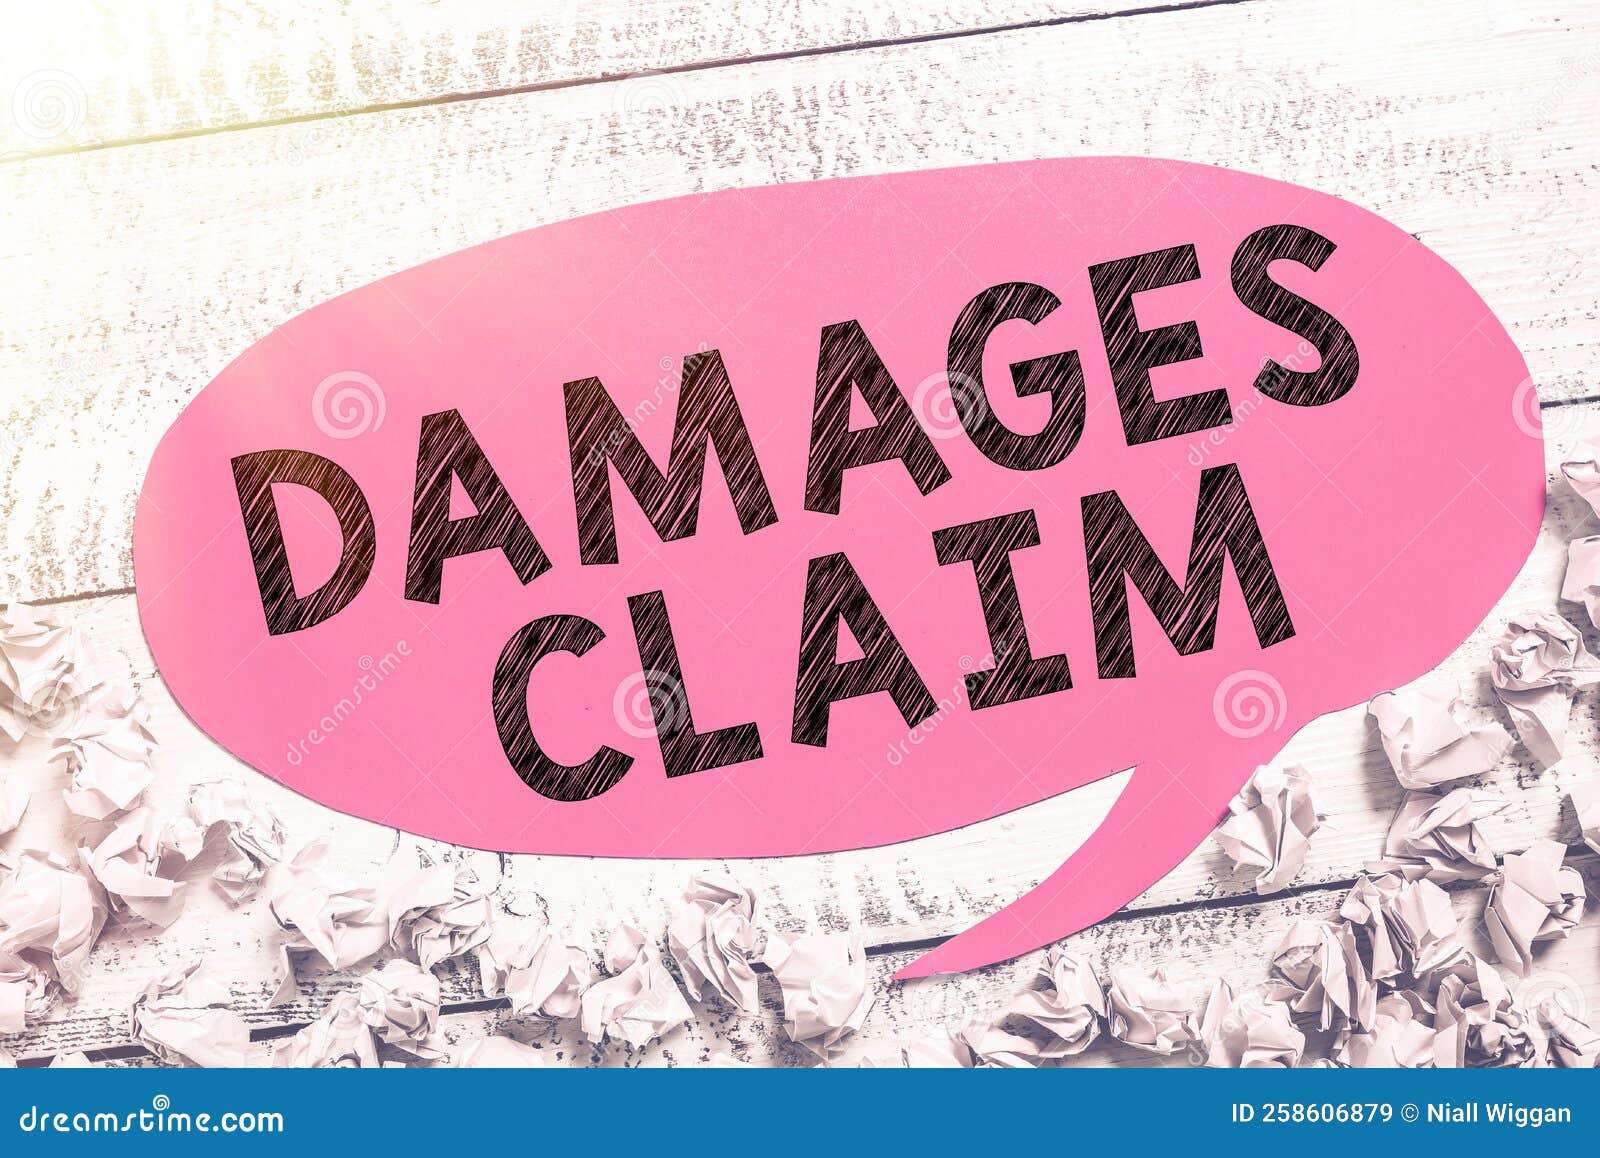 handwriting text damages claim. word written on demand compensation litigate insurance file suit